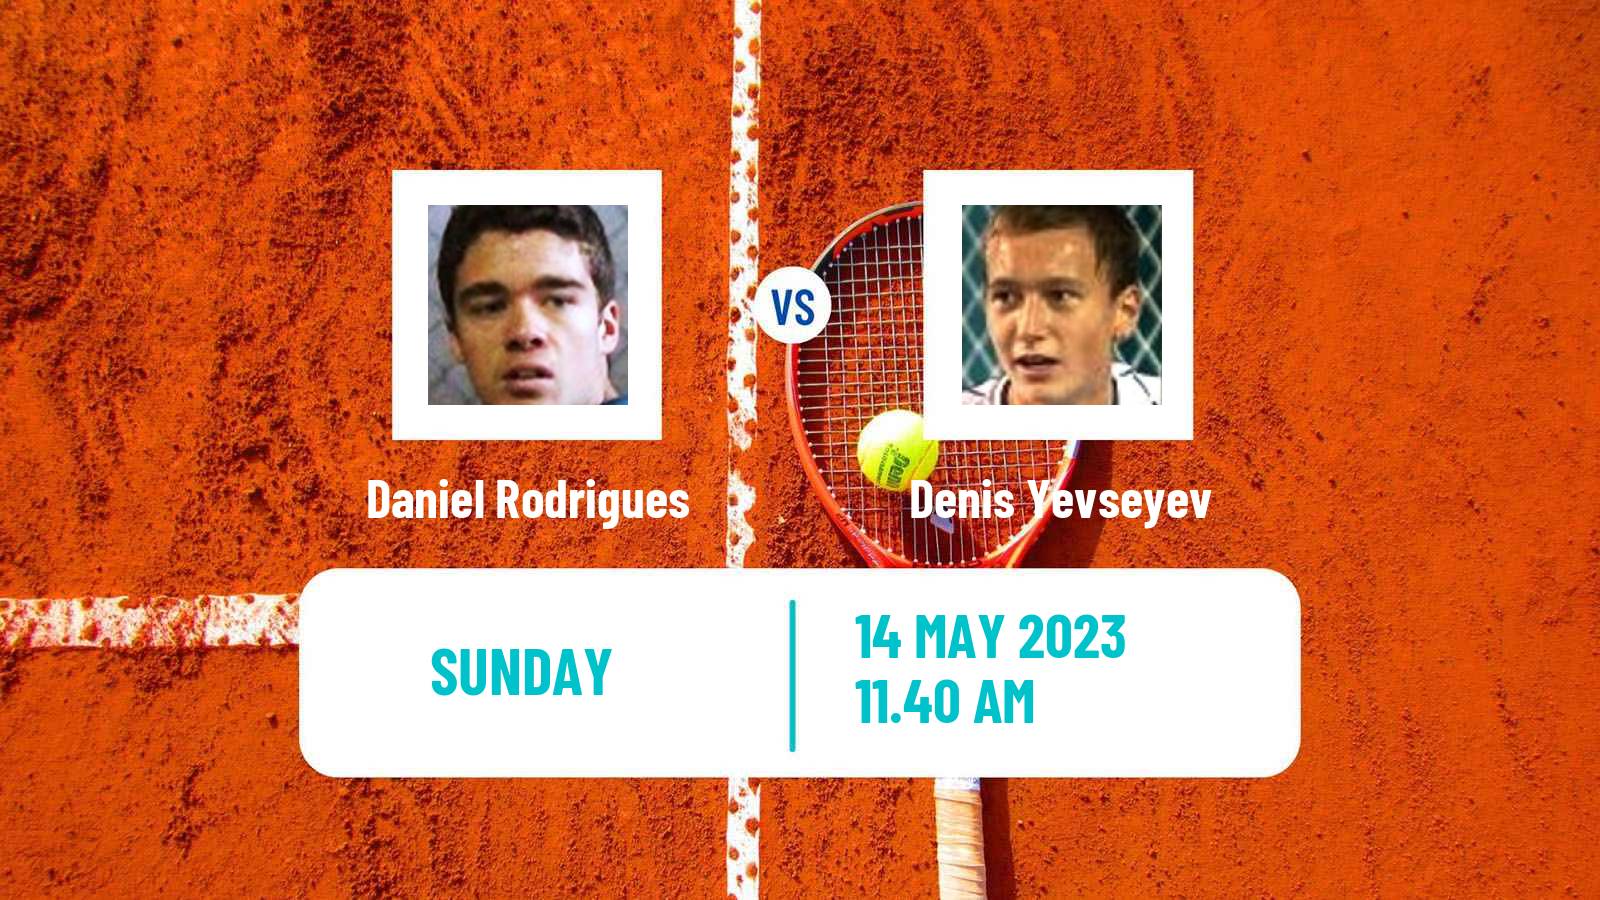 Tennis ATP Challenger Daniel Rodrigues - Denis Yevseyev